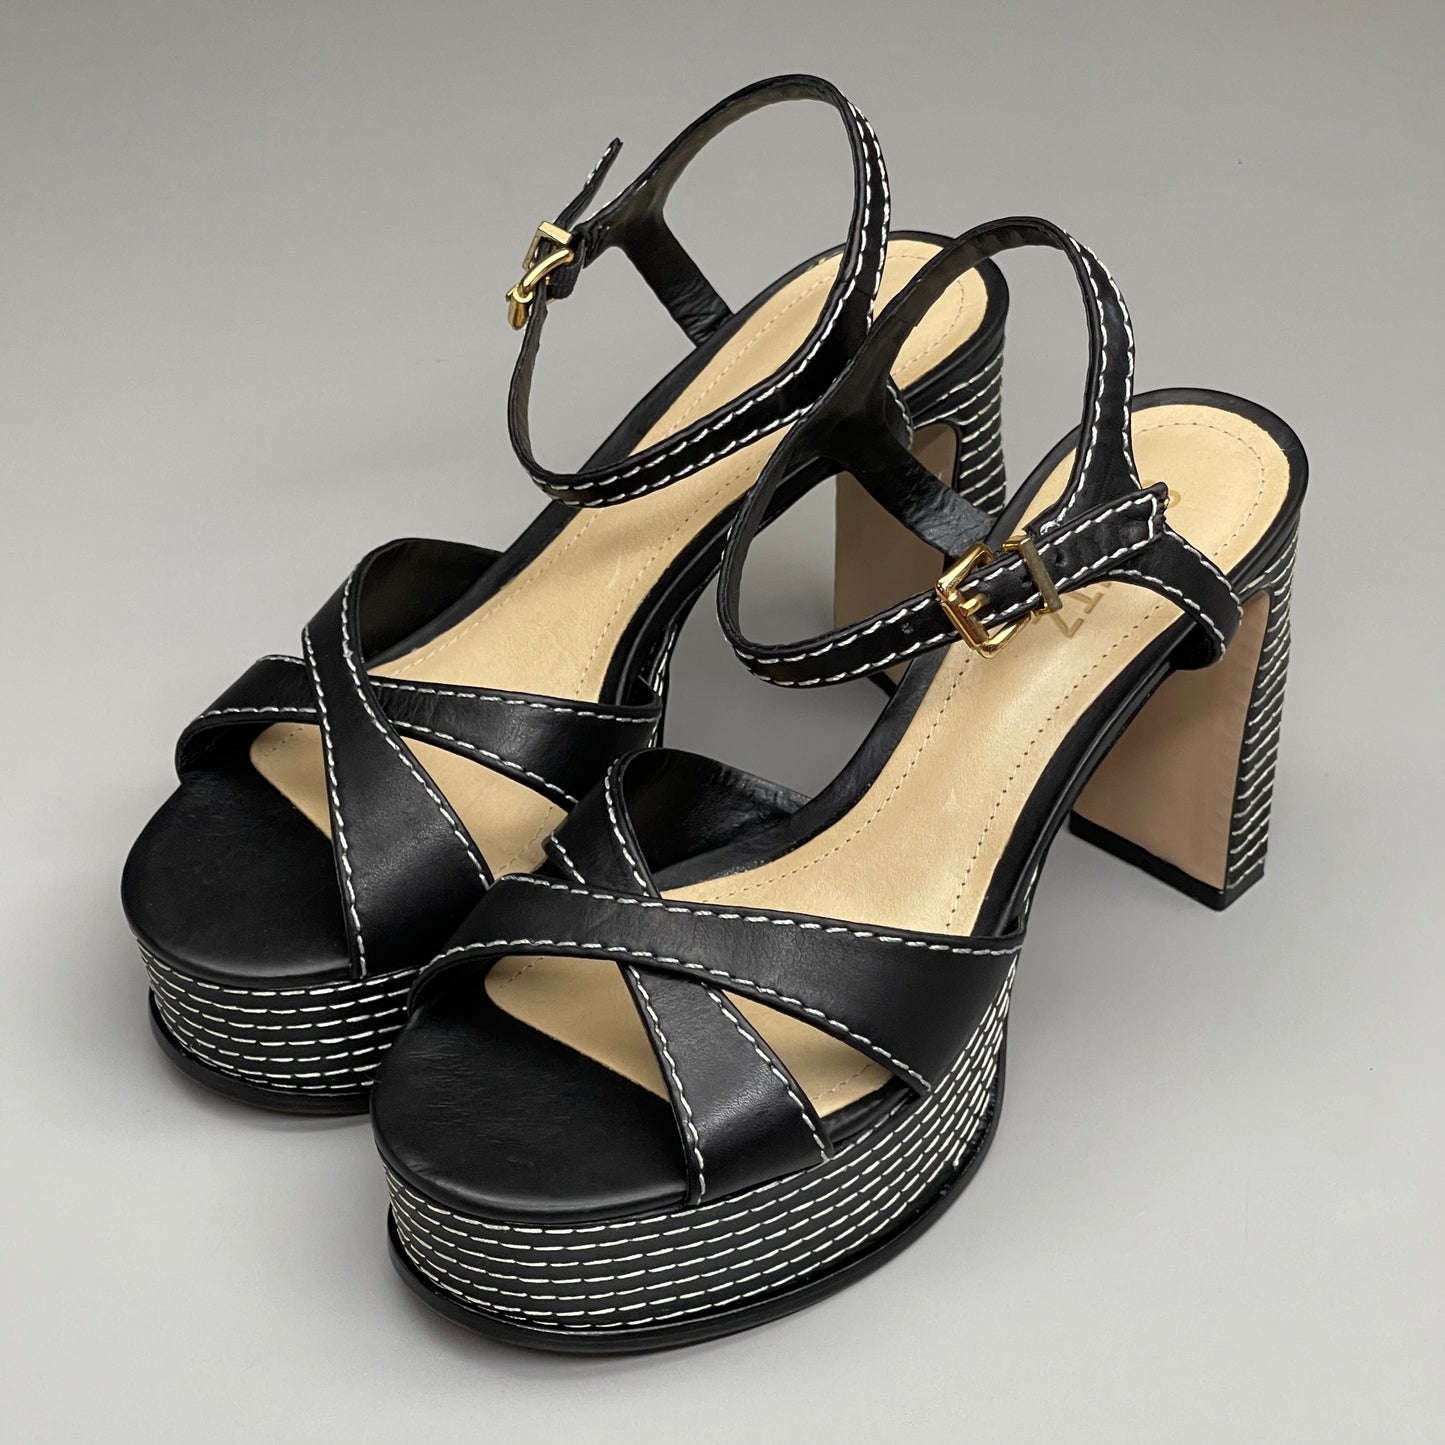 SCHUTZ Keefa Casual Women's Leather Sandal Black Platform 4" Heel Shoes Sz 9.5B (New)